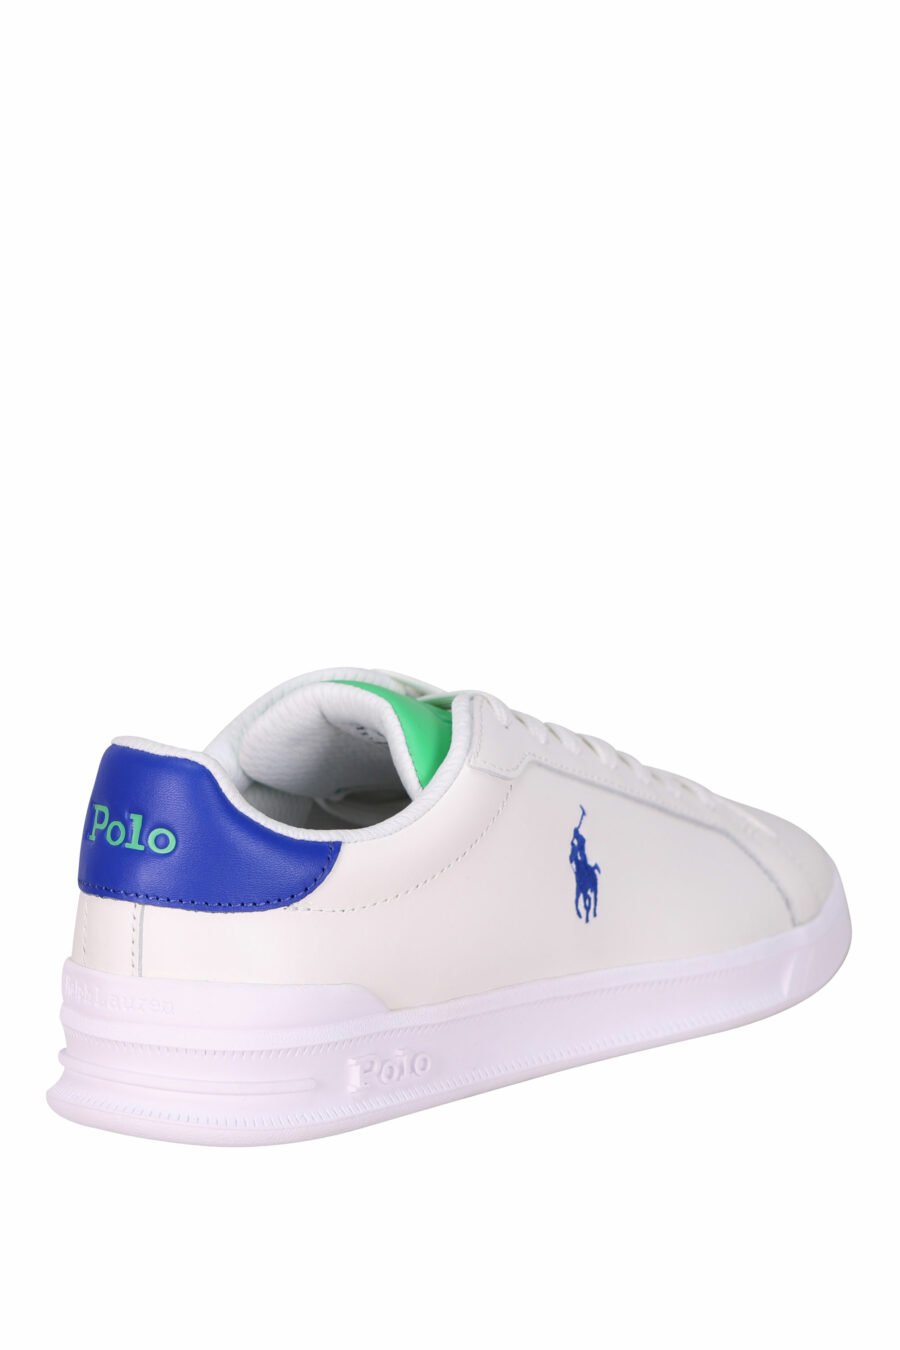 Zapatillas blancas con detalle verde y azul con minilogo "polo" - 3616535905740 1